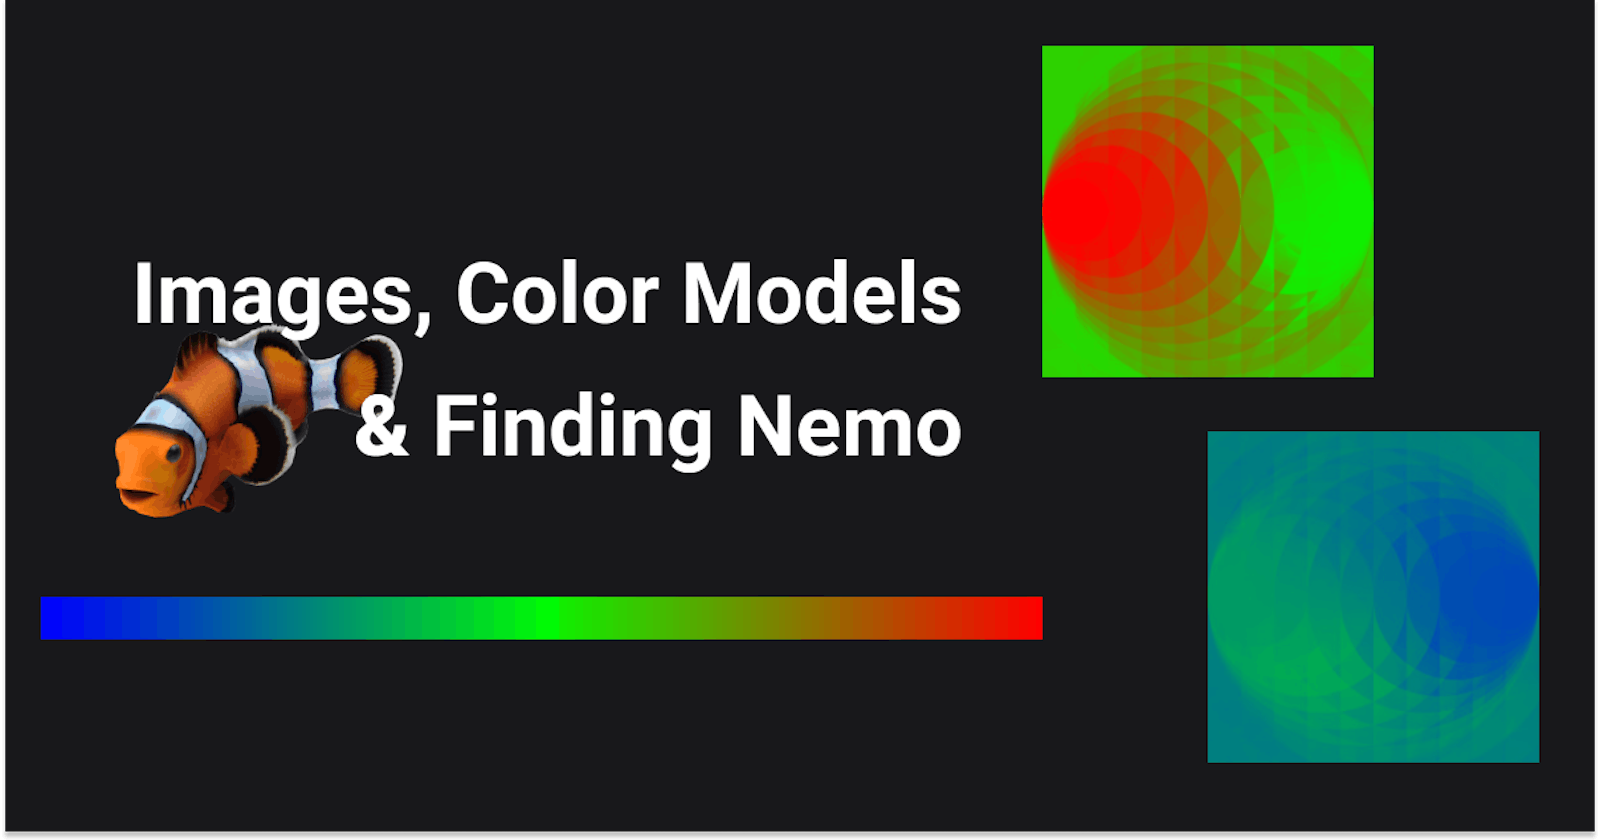 Understanding Images, Color Models & Finding Nemo